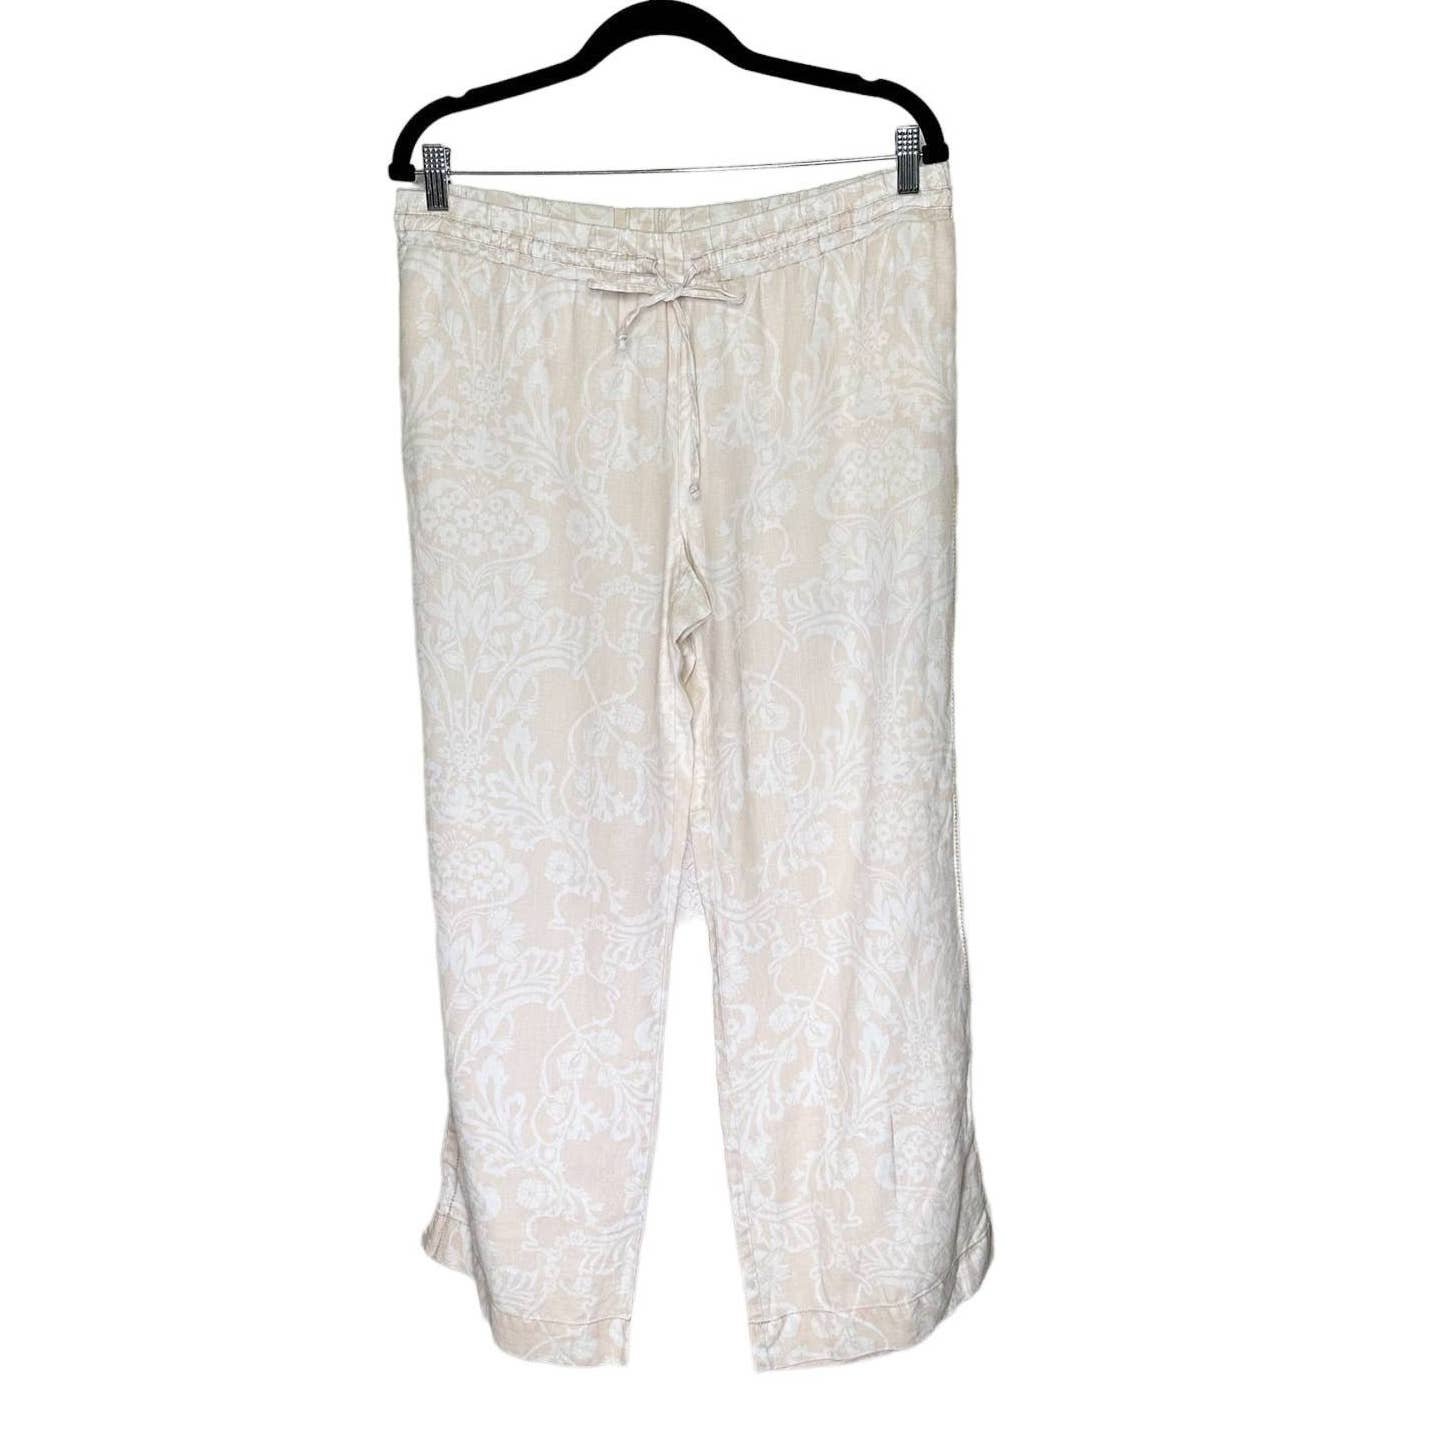 Elegant INC International Concepts Beach White & Cream Linen Wide Leg Pants Size 14 n2fwGkyJH best sale